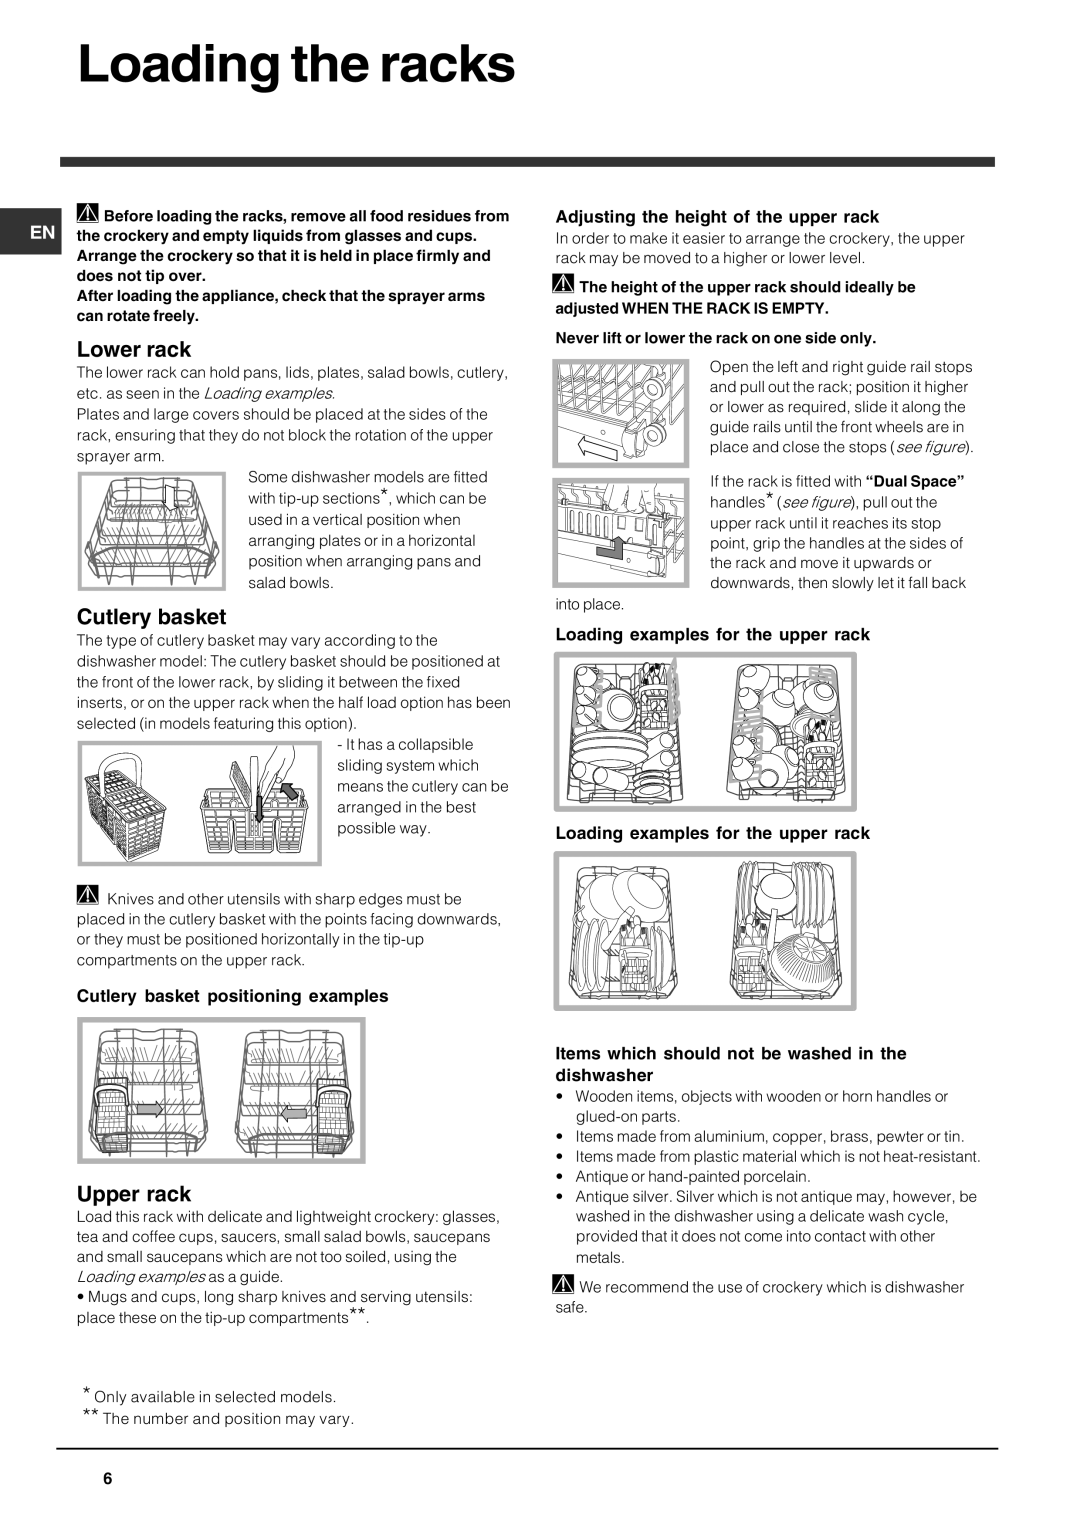 Indesit DIS 04 operating instructions Loading the racks, Lower rack, Cutlery basket, Upper rack 